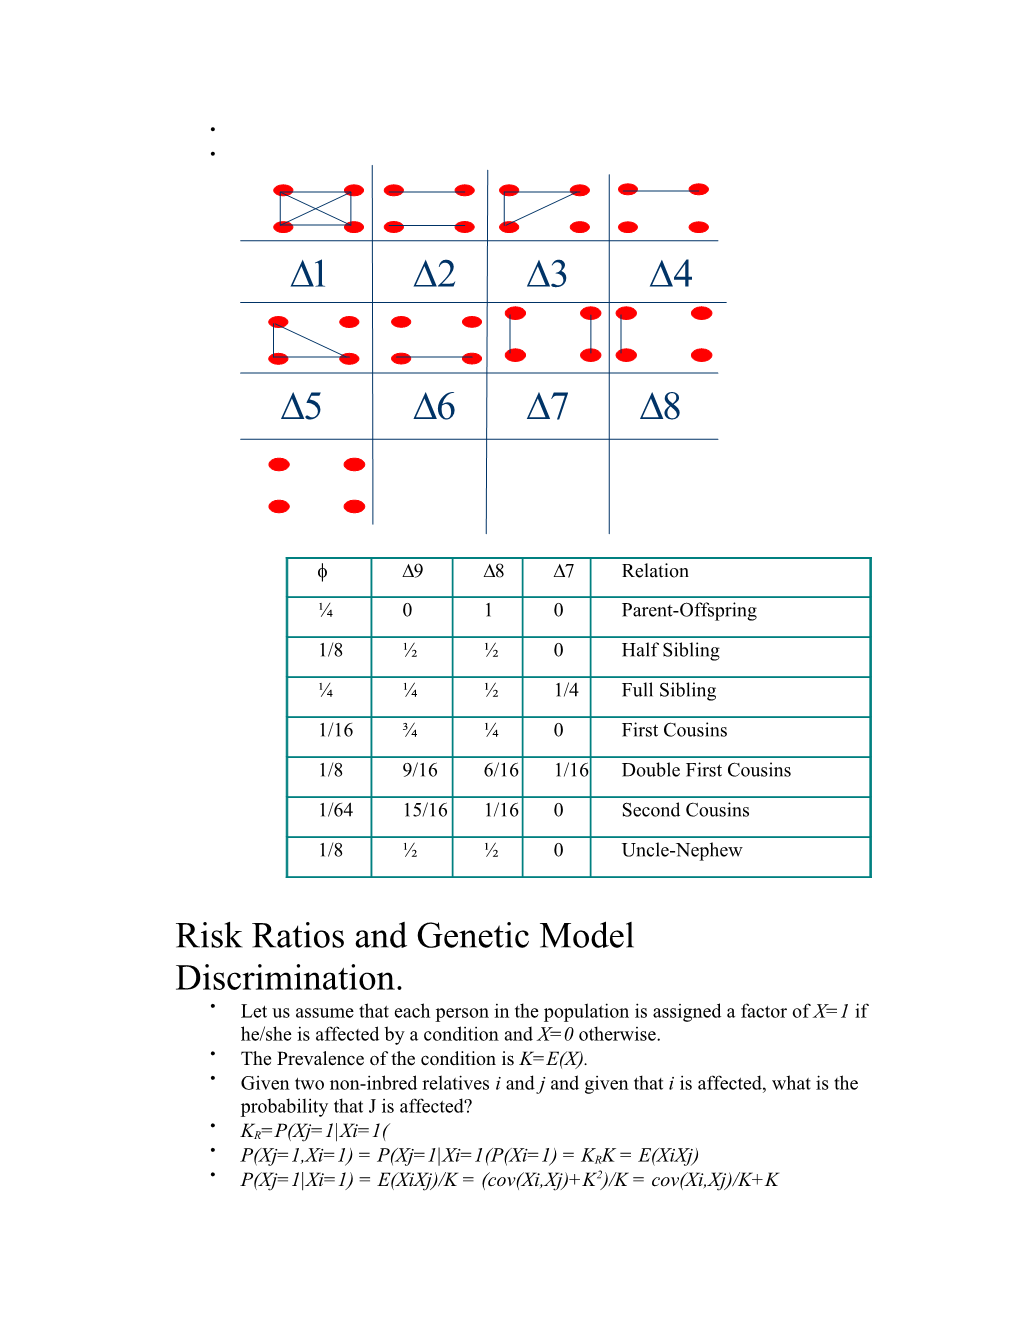 Risk Ratios and Genetic Model Discrimination